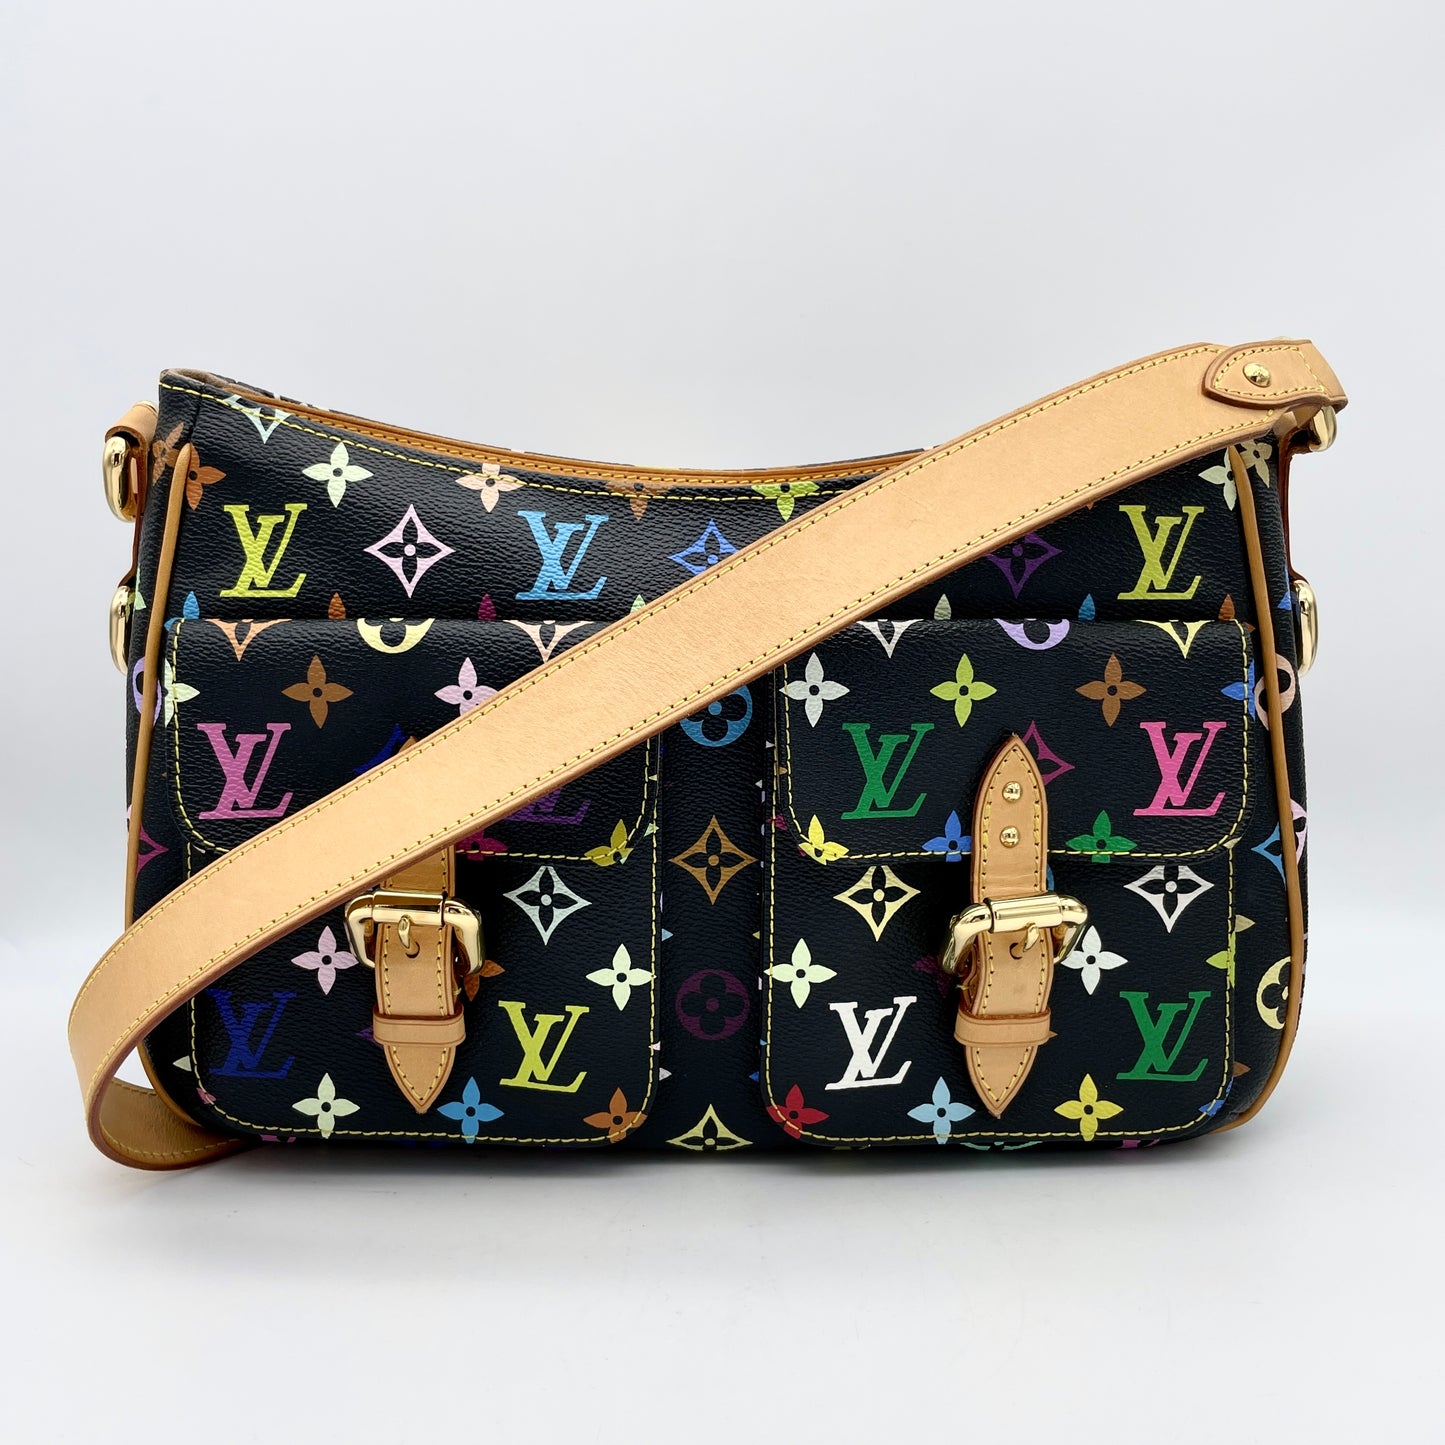 Louis Vuitton Monogram Multicolor Lodge GM Crossbody